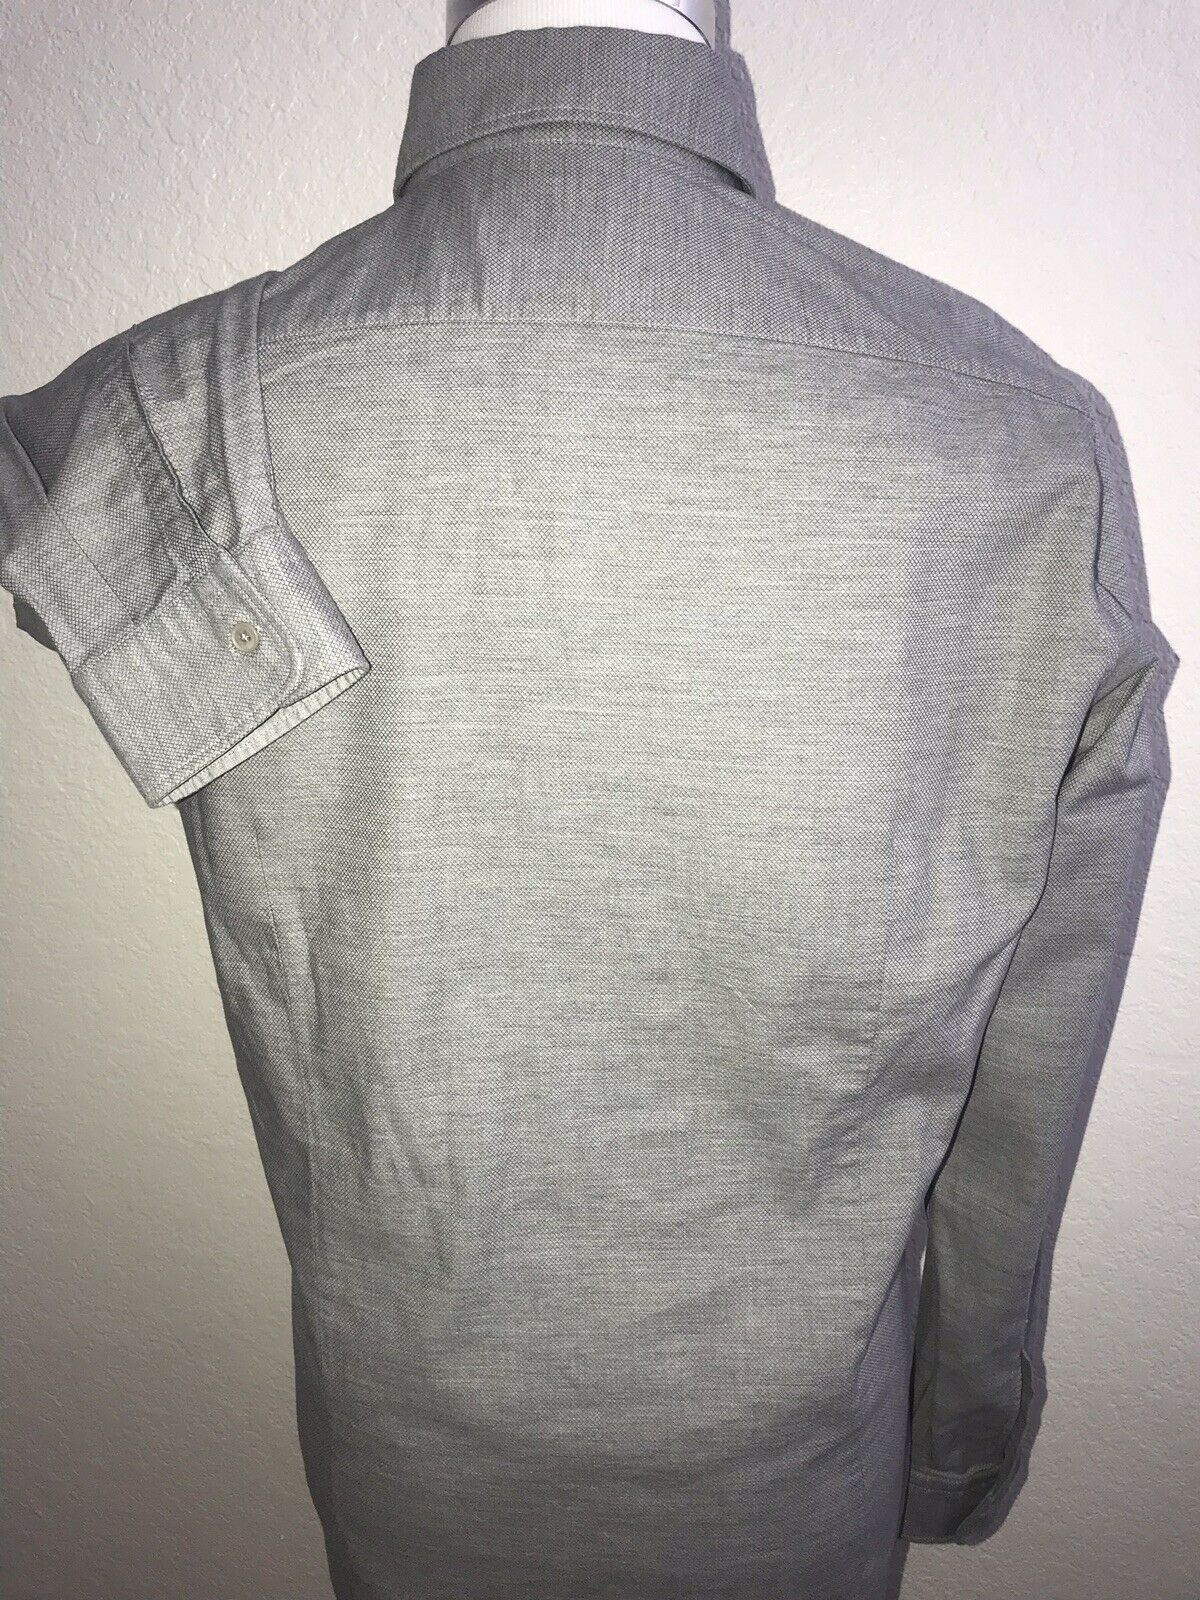 NWT $165 Hugo BossLeonard2 Mens Regular Fit Cotton Gray Dress Shirt Large